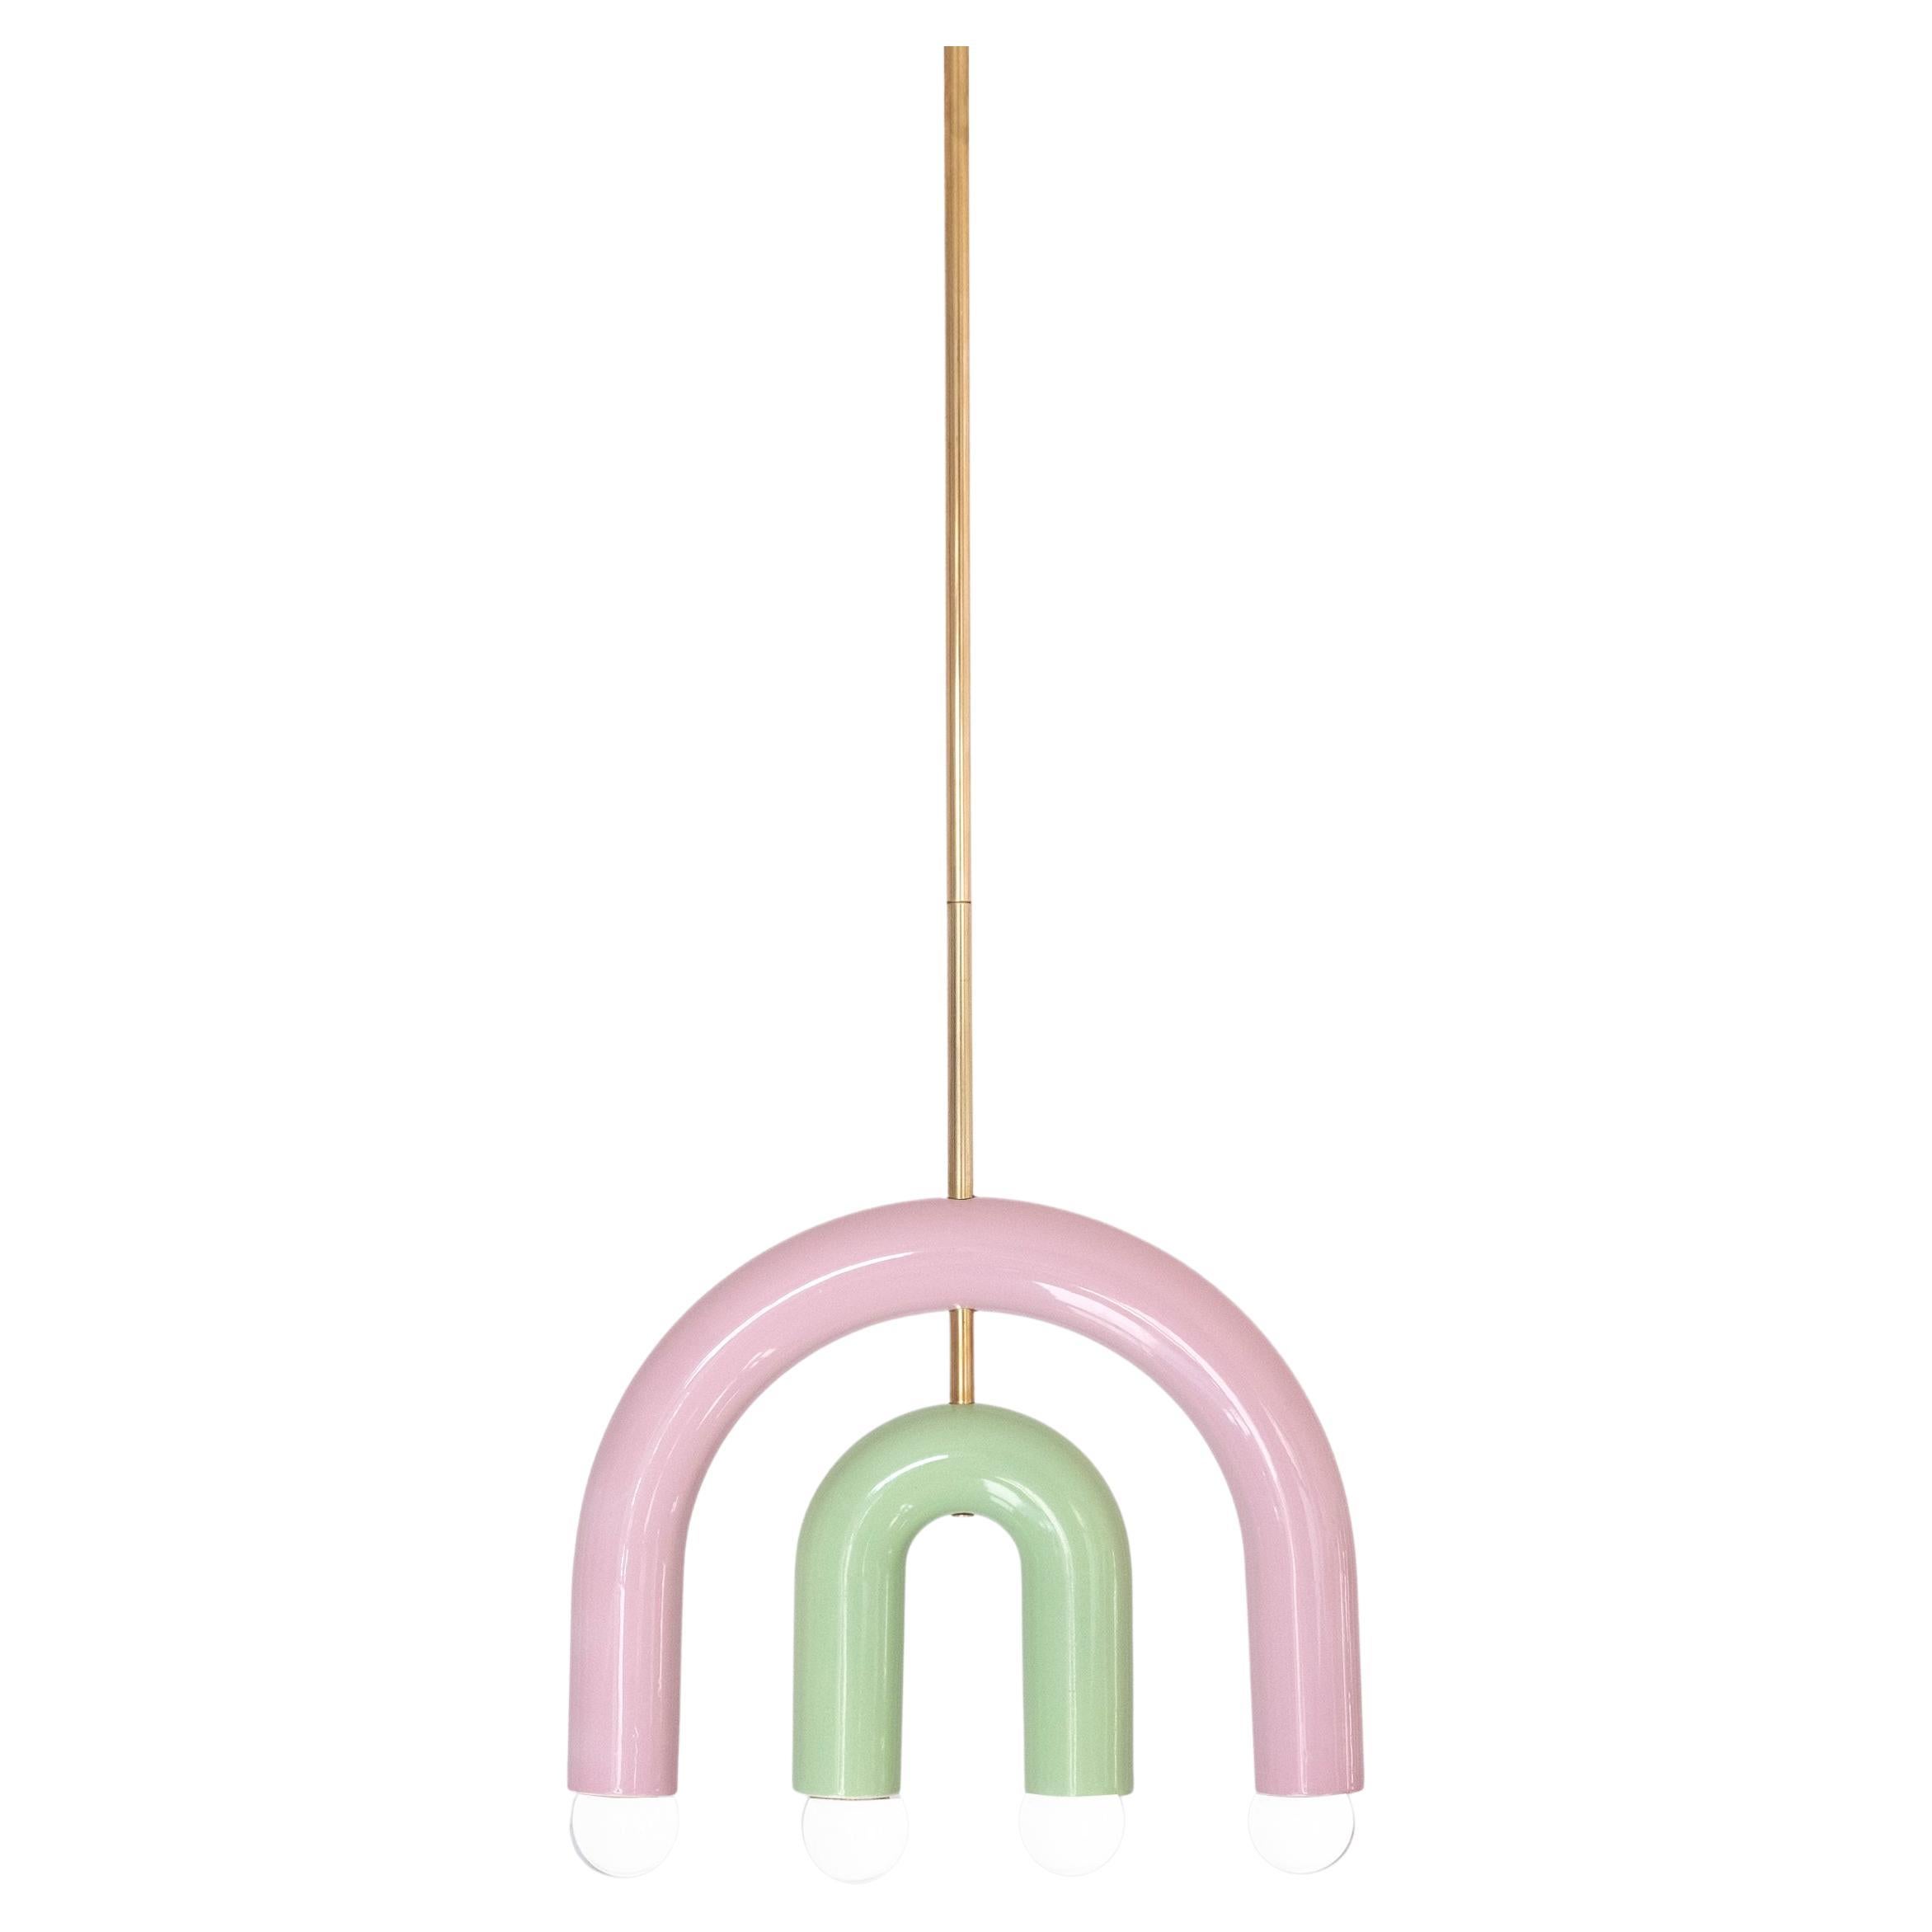 TRN C1 Pendant lamp / ceiling lamp / chandelier 
Designer: Pani Jurek

Model shown: TRN C1, Pistachio, Pink, Brass rod 
Dimensions: H 27.5 x 35 x 5 cm

Bulb (not included): E27/E26, compatible with US electric system

Materials: Hand glazed ceramic